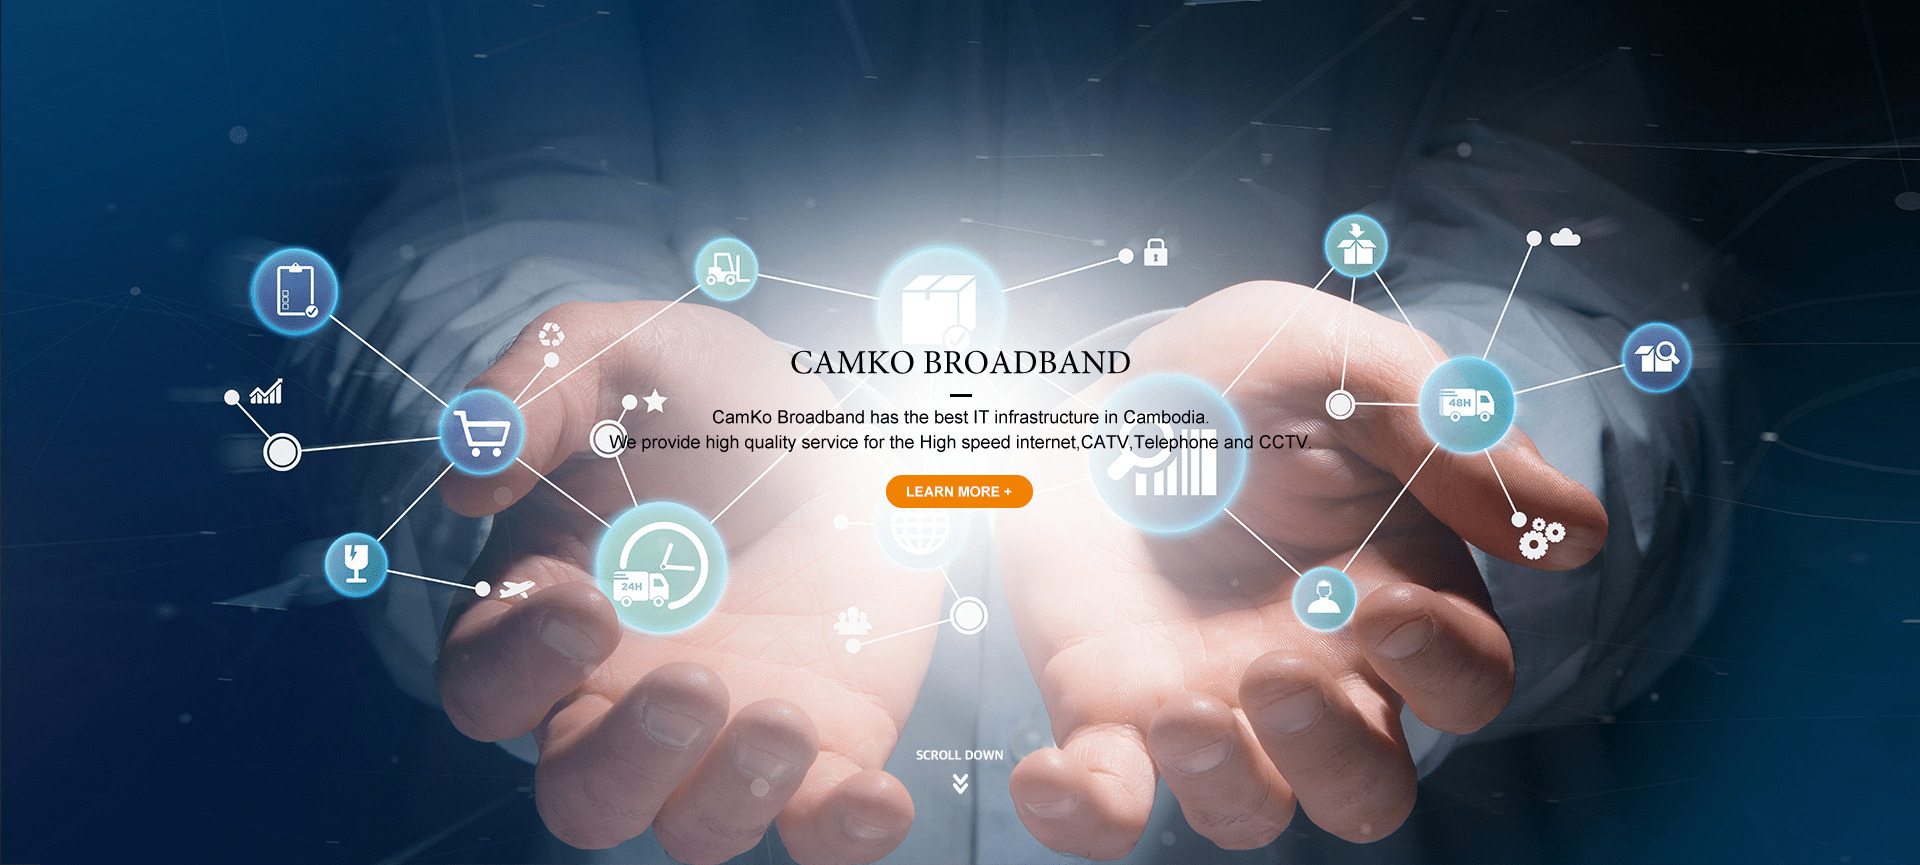 camko-broadband